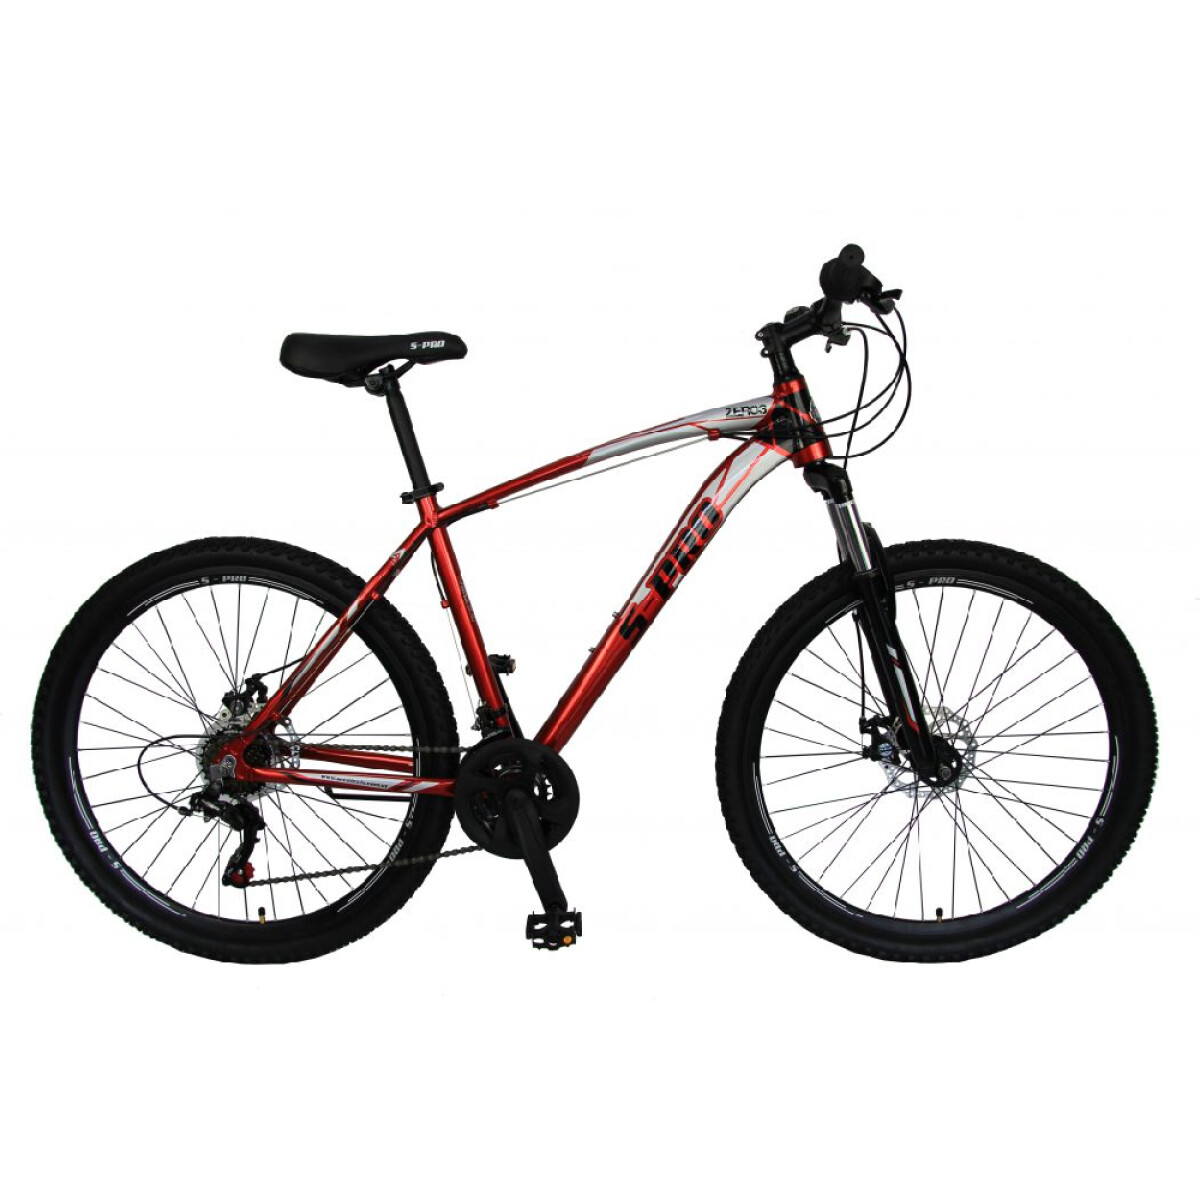 Bicicleta S-PRO ZERO3 Man - Rojo y Gris 